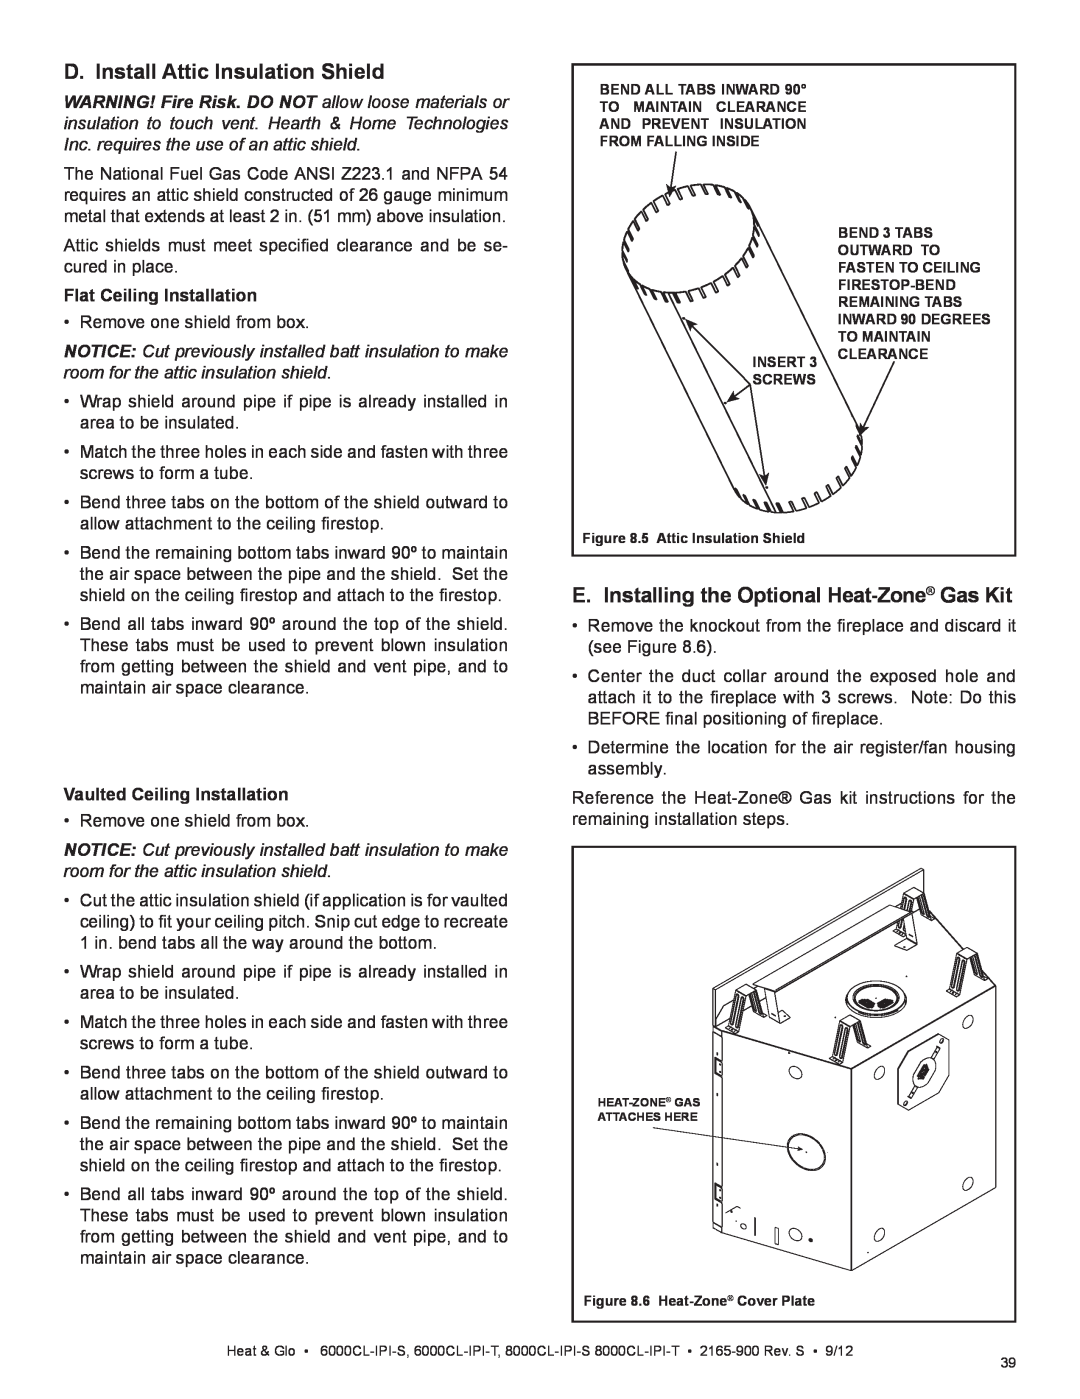 Heat & Glo LifeStyle 6000CL-IPI-T manual D. Install Attic Insulation Shield, E. Installing the Optional Heat-Zone Gas Kit 